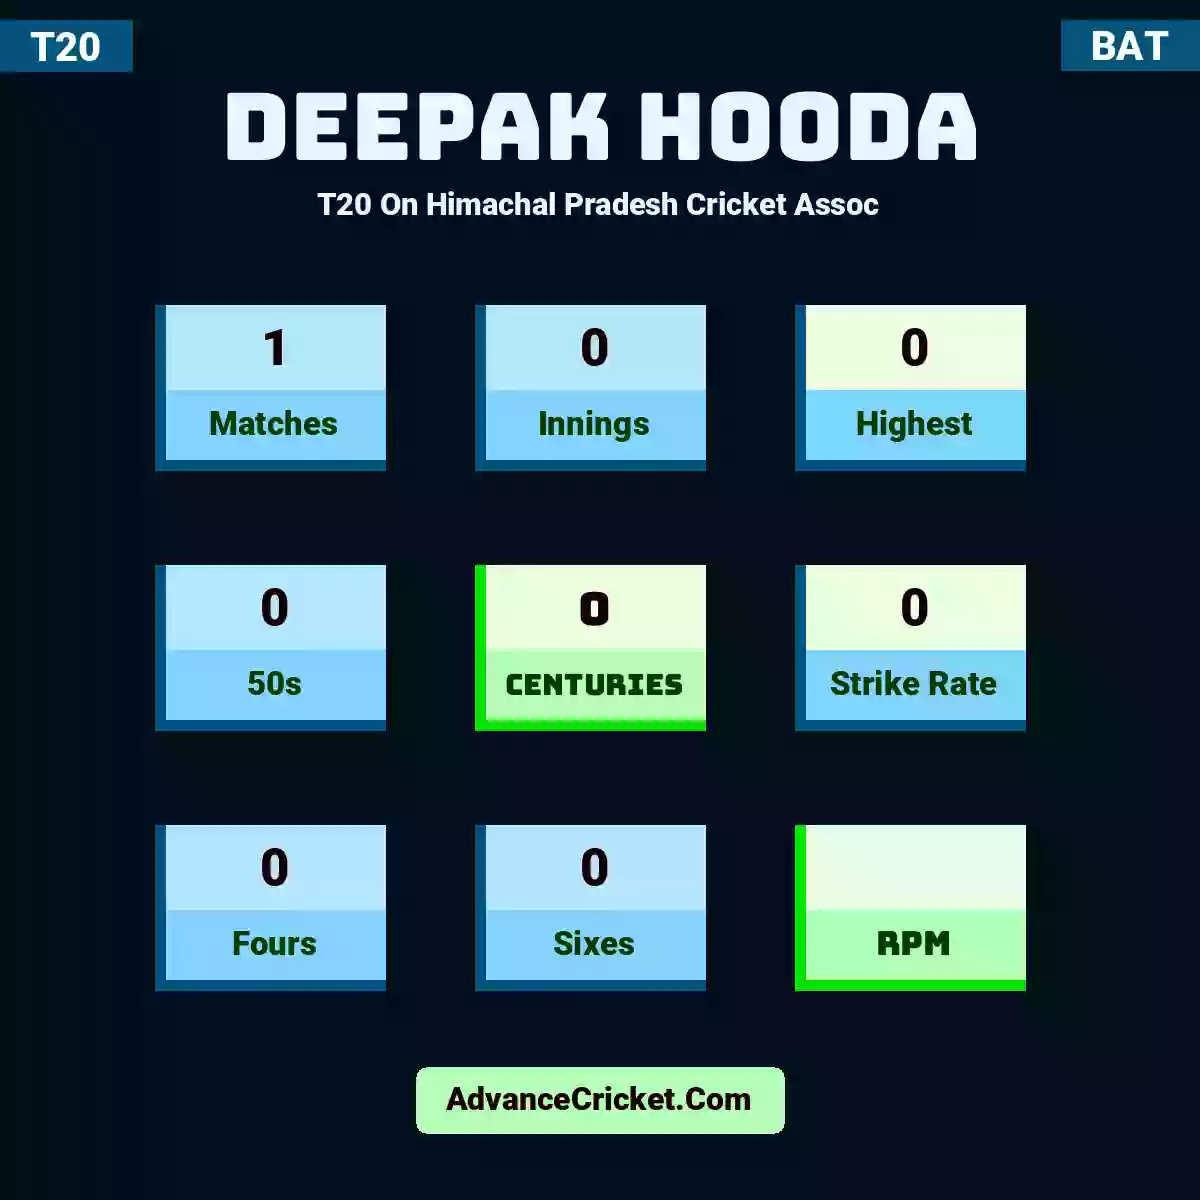 Deepak Hooda T20  On Himachal Pradesh Cricket Assoc, Deepak Hooda played 1 matches, scored 0 runs as highest, 0 half-centuries, and 0 centuries, with a strike rate of 0. D.Hooda hit 0 fours and 0 sixes.